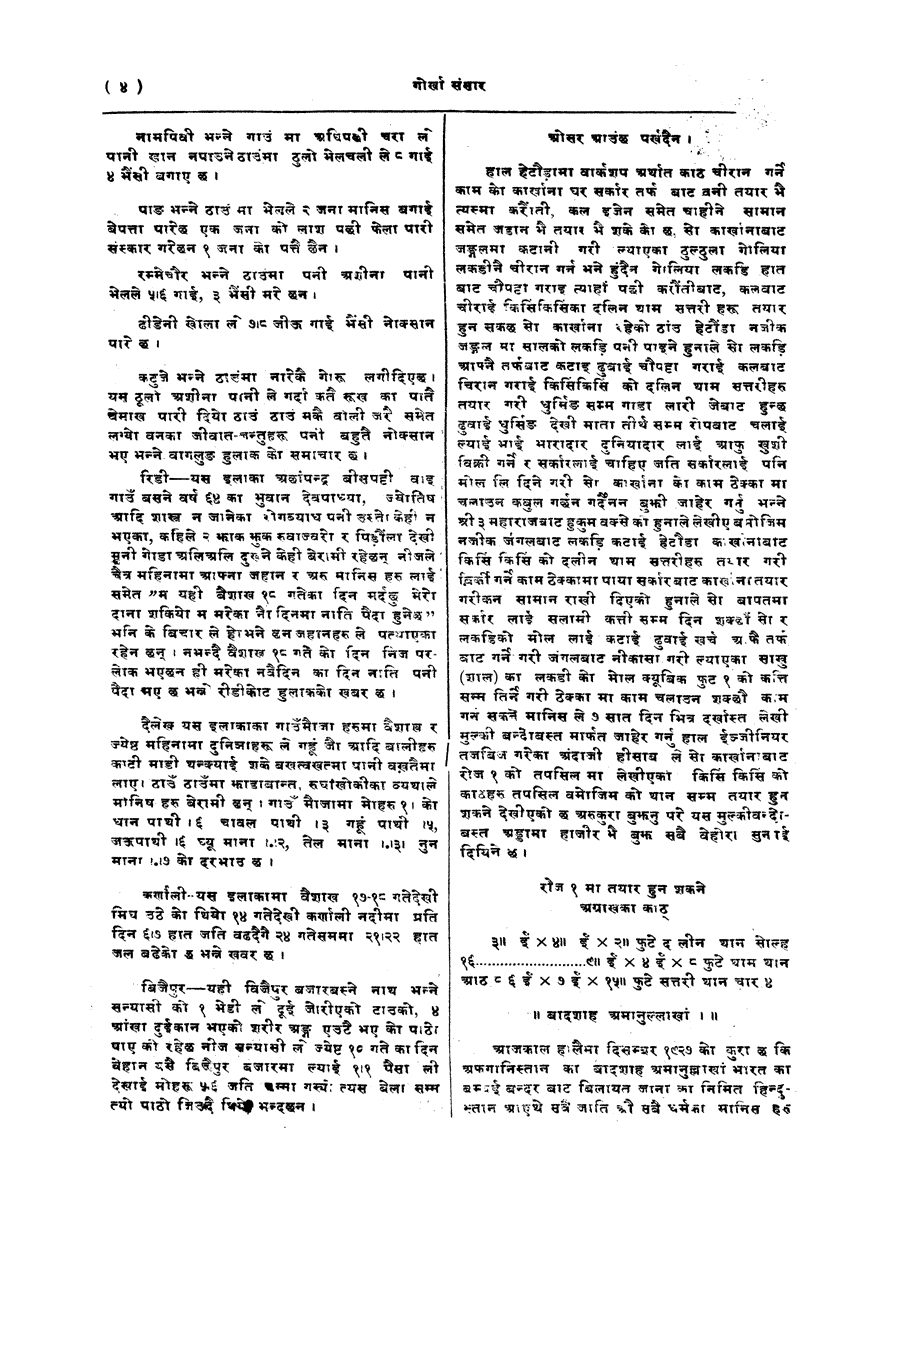 Gorkha Sansar, 22 June 1928, page 4